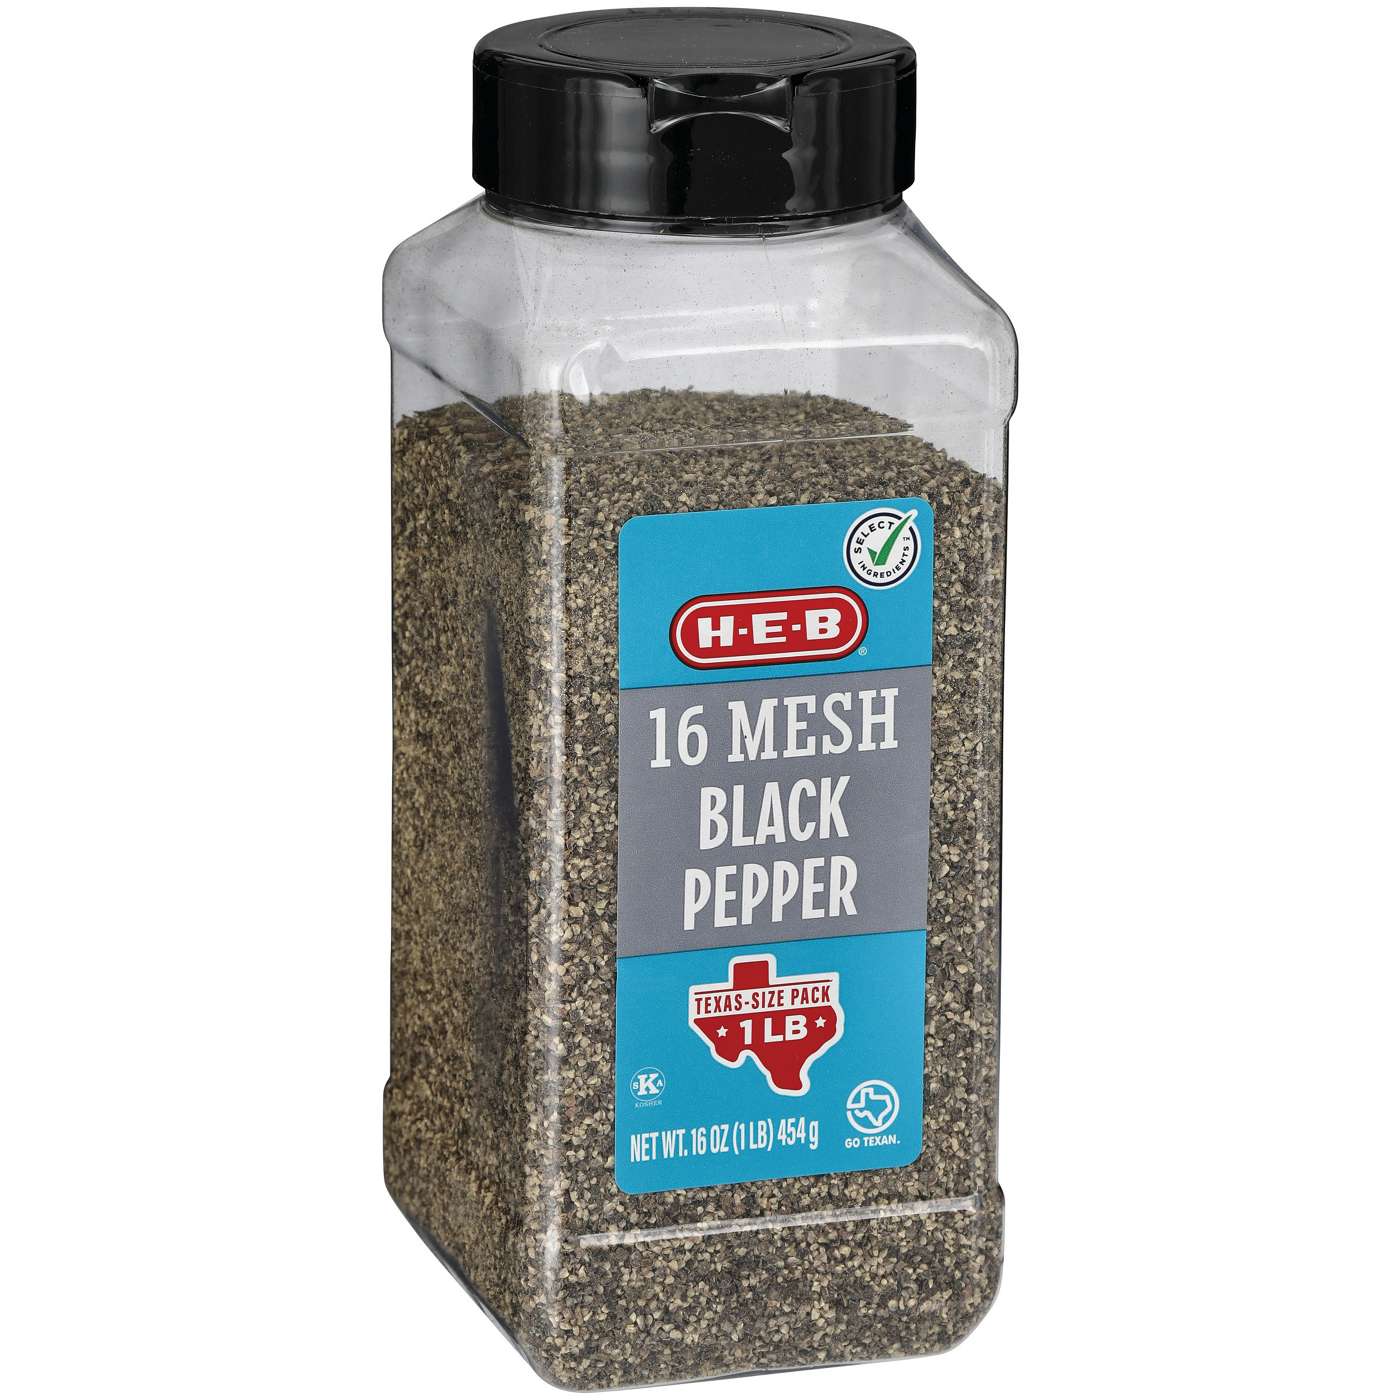 H-E-B 16 Mesh Black Pepper - Texas-Size Pack; image 2 of 2